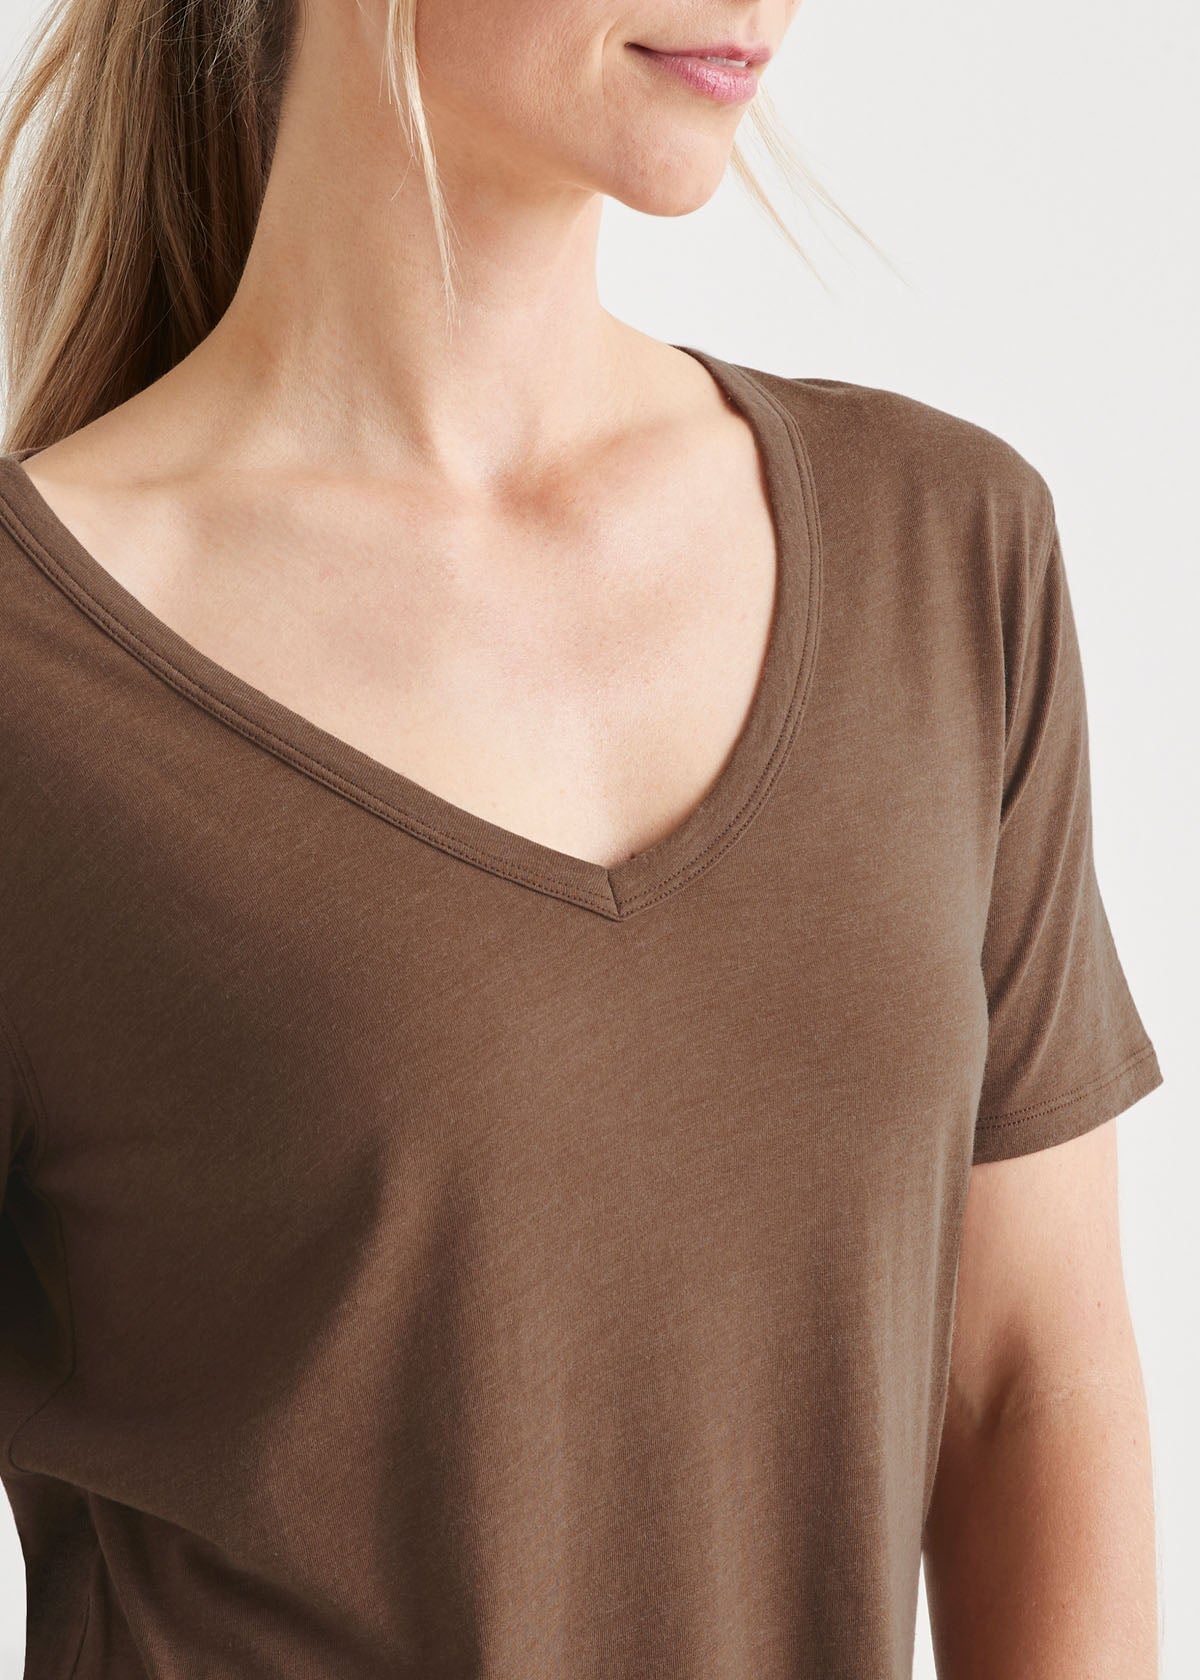 womens brown soft lightweight v-neck t-shirt neckline